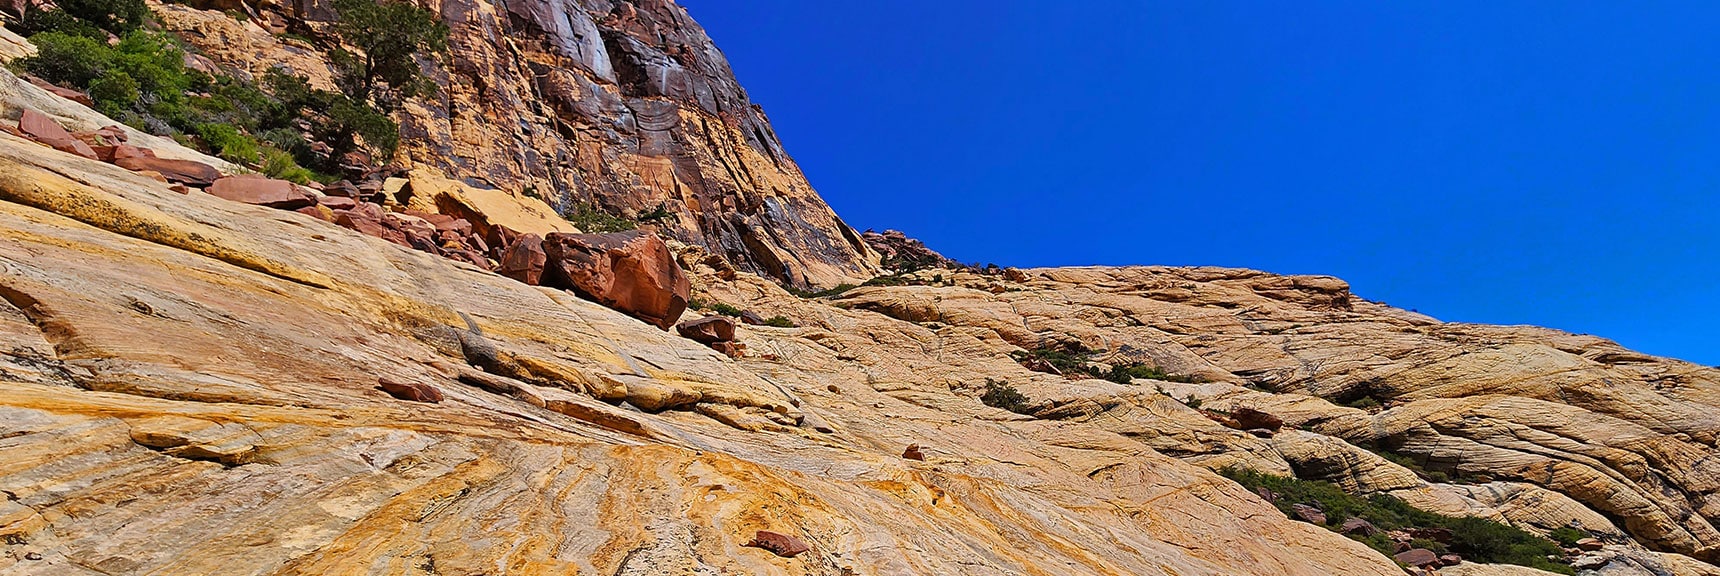 Reach Sandstone Ledge at Summit of Boulder Field | Juniper Peak Summit | Rainbow Mountain Wilderness, Nevada | David Smith, LasVegasAreaTrails.com